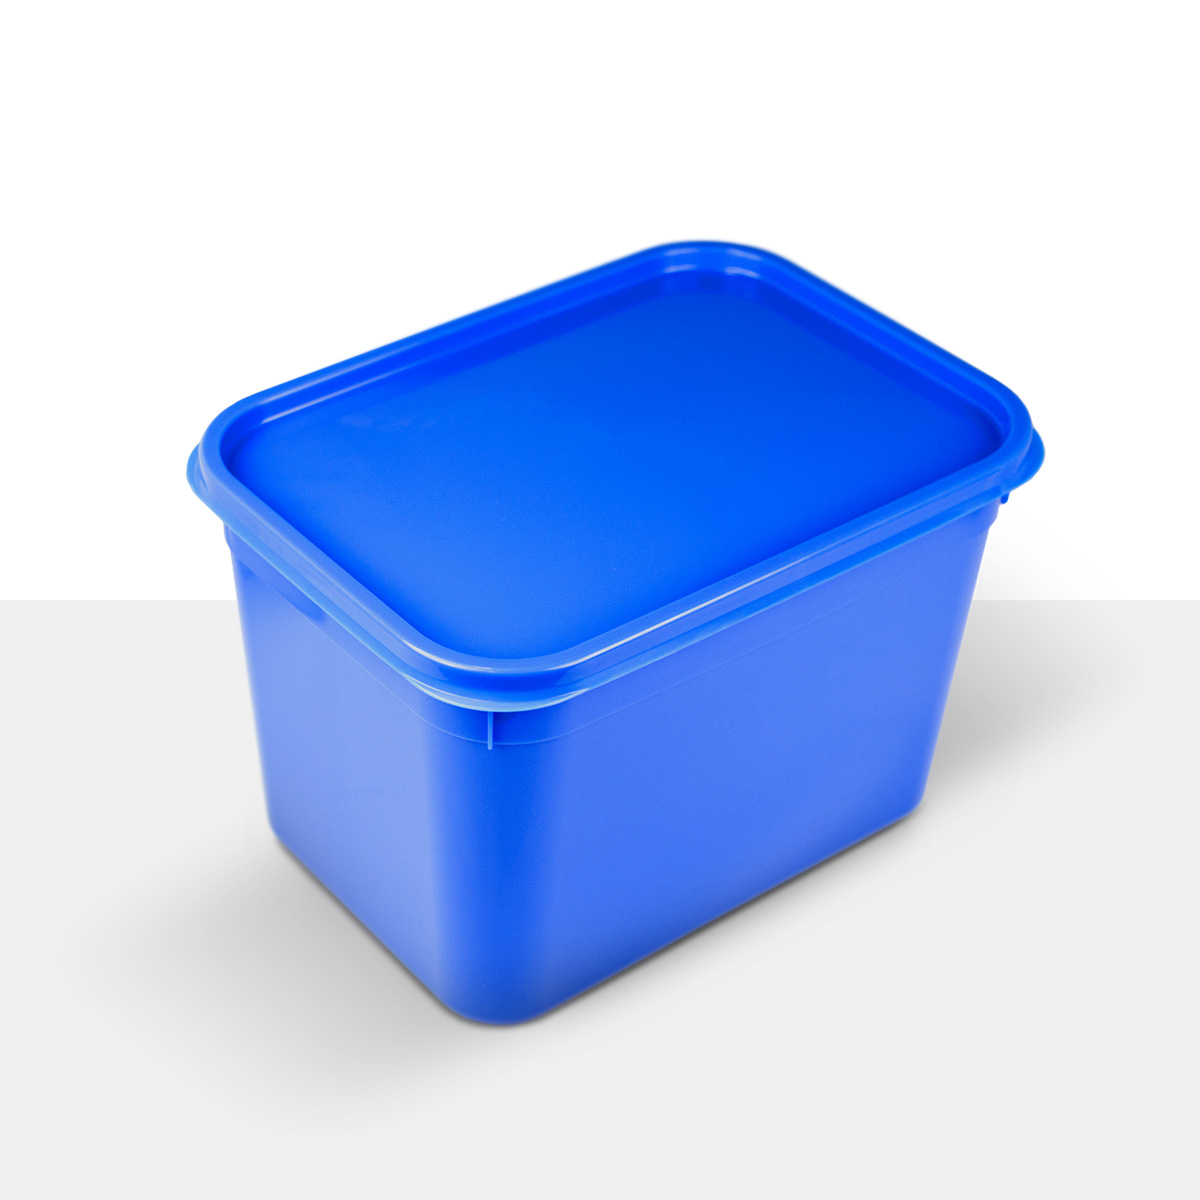 https://www.parkerspackaging.com/wp-content/uploads/2020/11/4ltr-container-blue-1.jpg